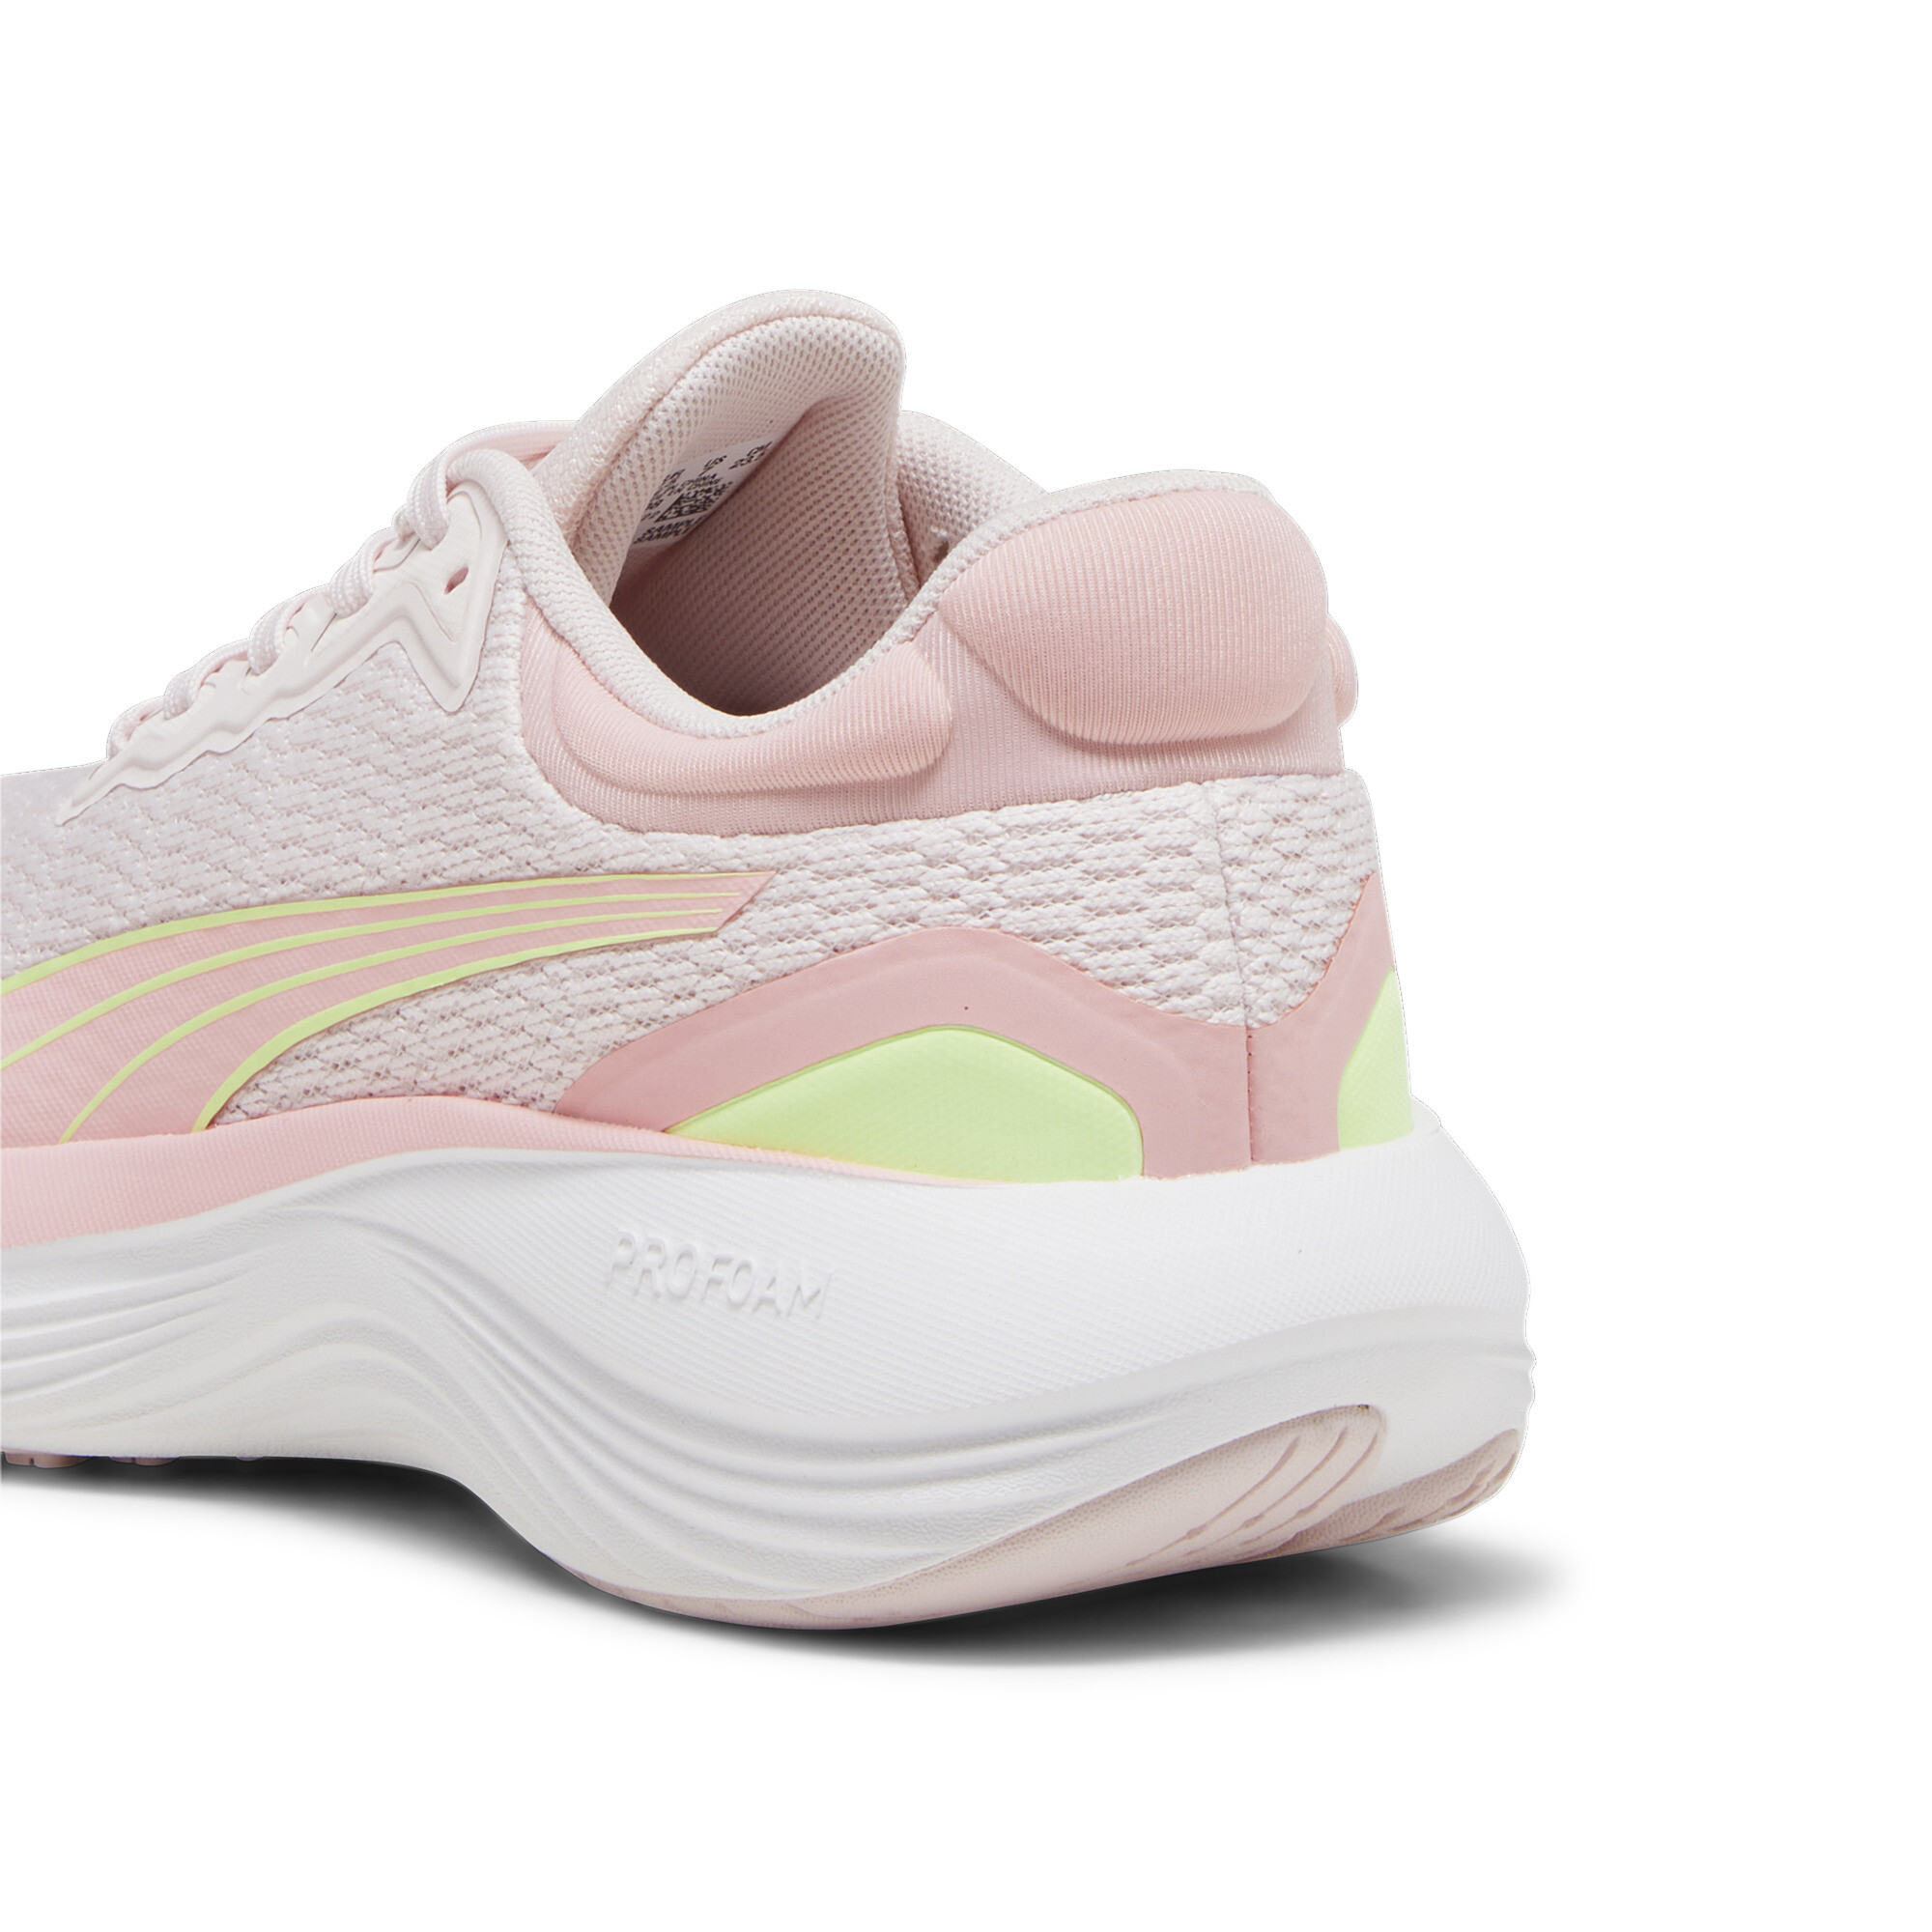 Men's PUMA Scend Pro Running Shoes In Pink, Size EU 40